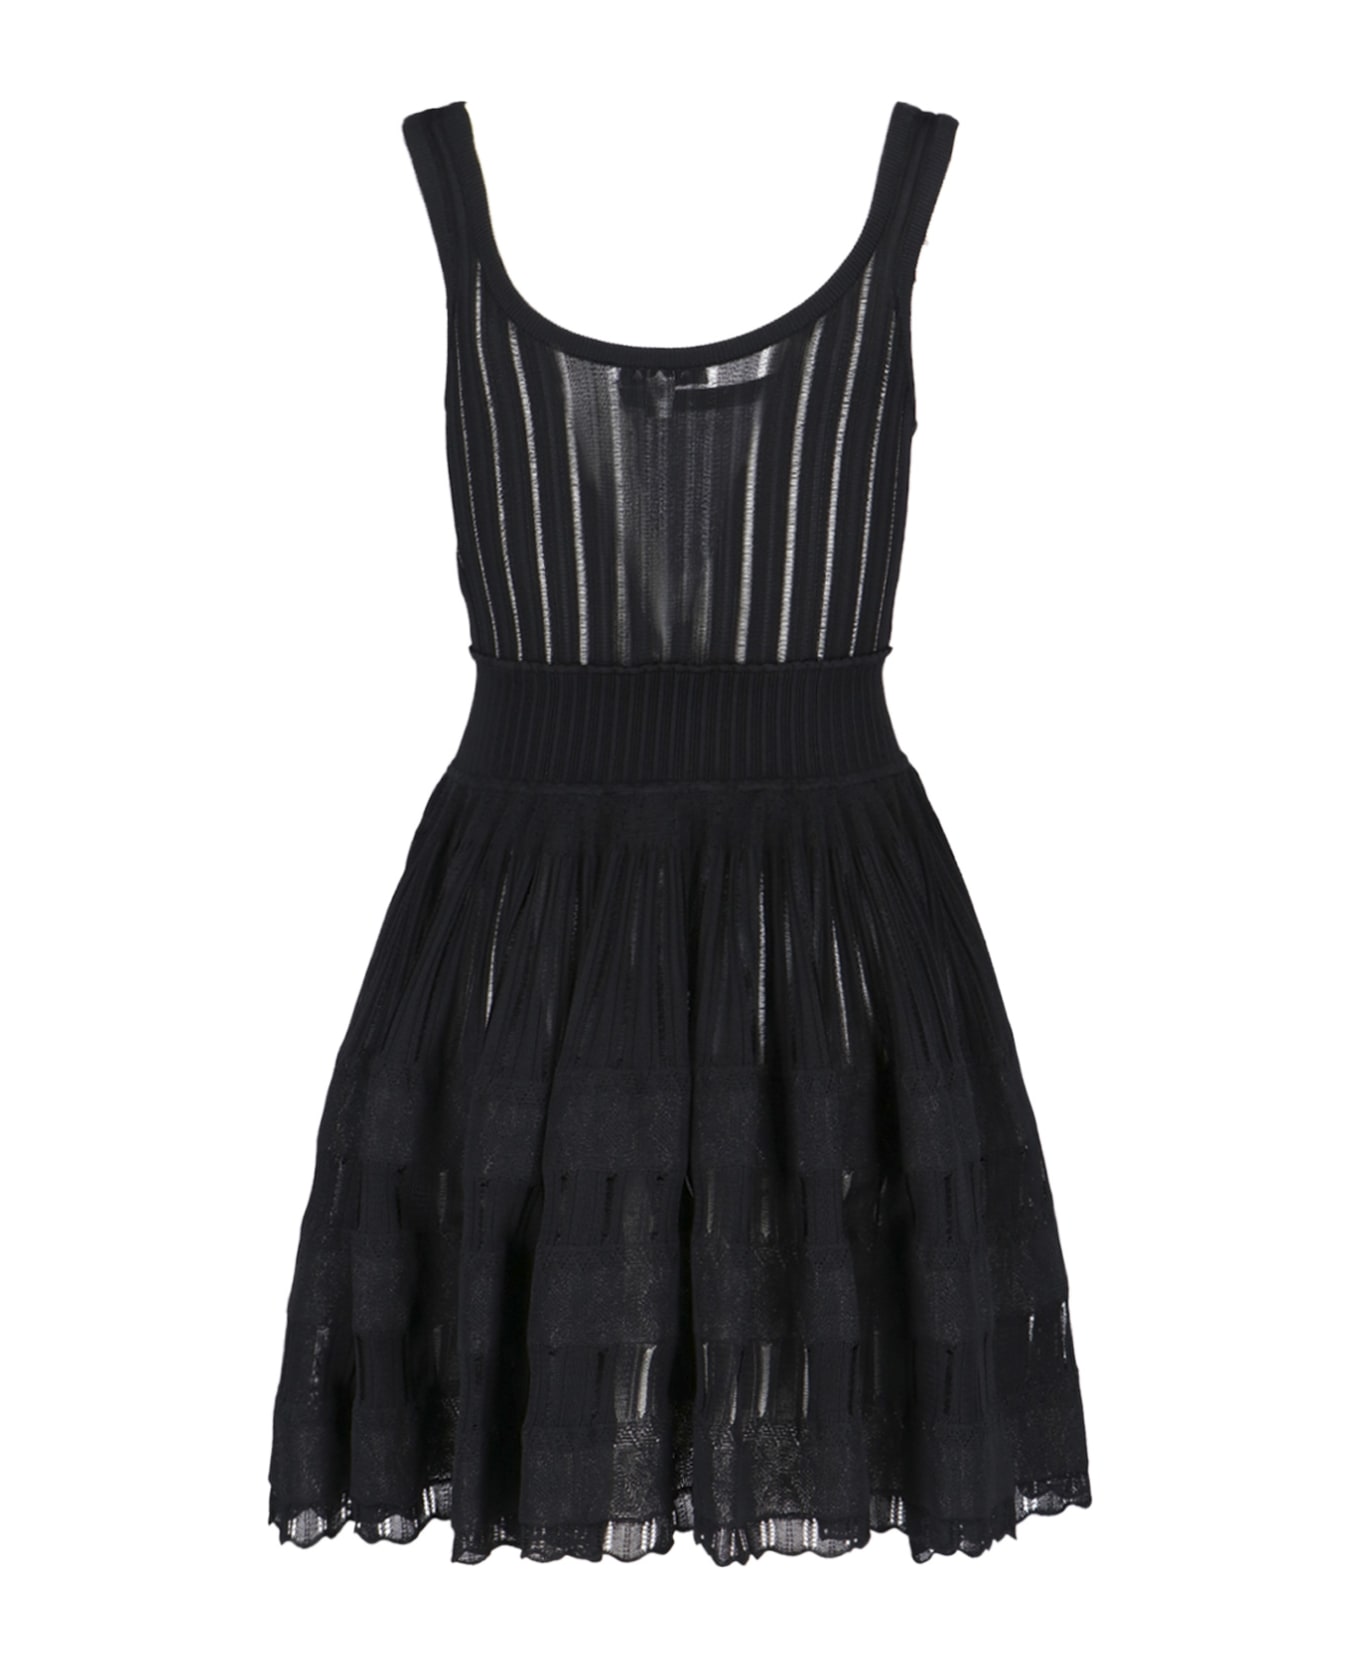 Alaia 'crinoline' Midi Dress - Black  